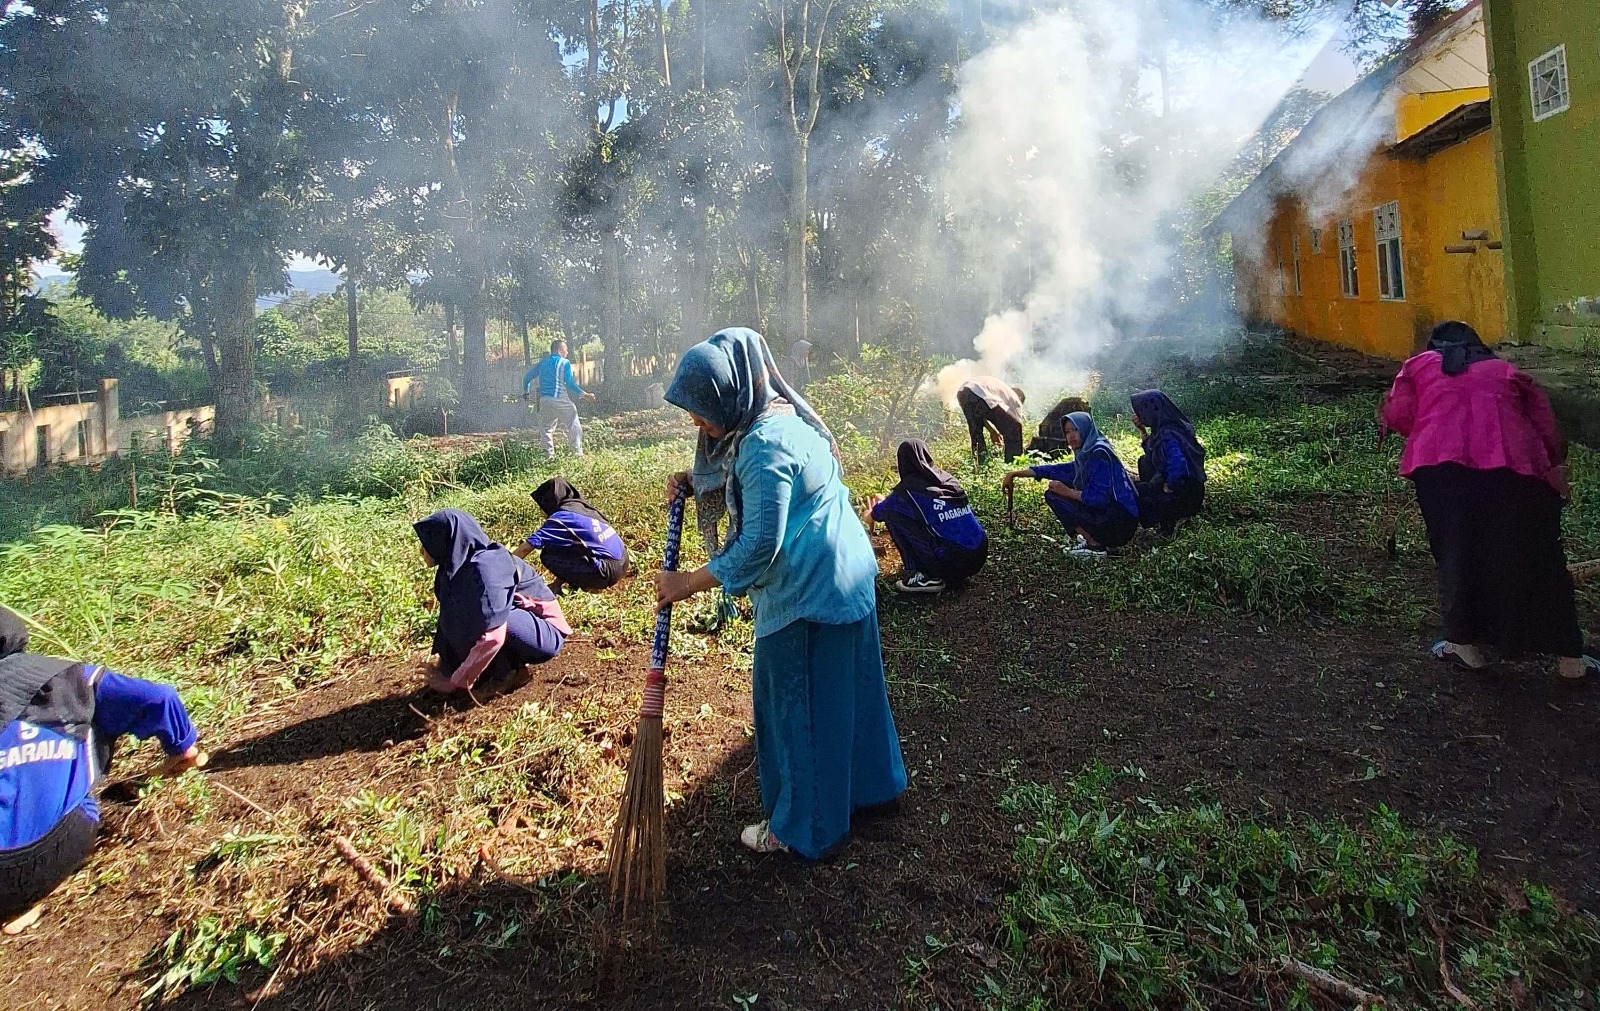 Gotong Royong Tanamkan Kebersamaan, Menciptakan Lingkungan Sekolah yang Bersih di SMAN 5 Pagaralam